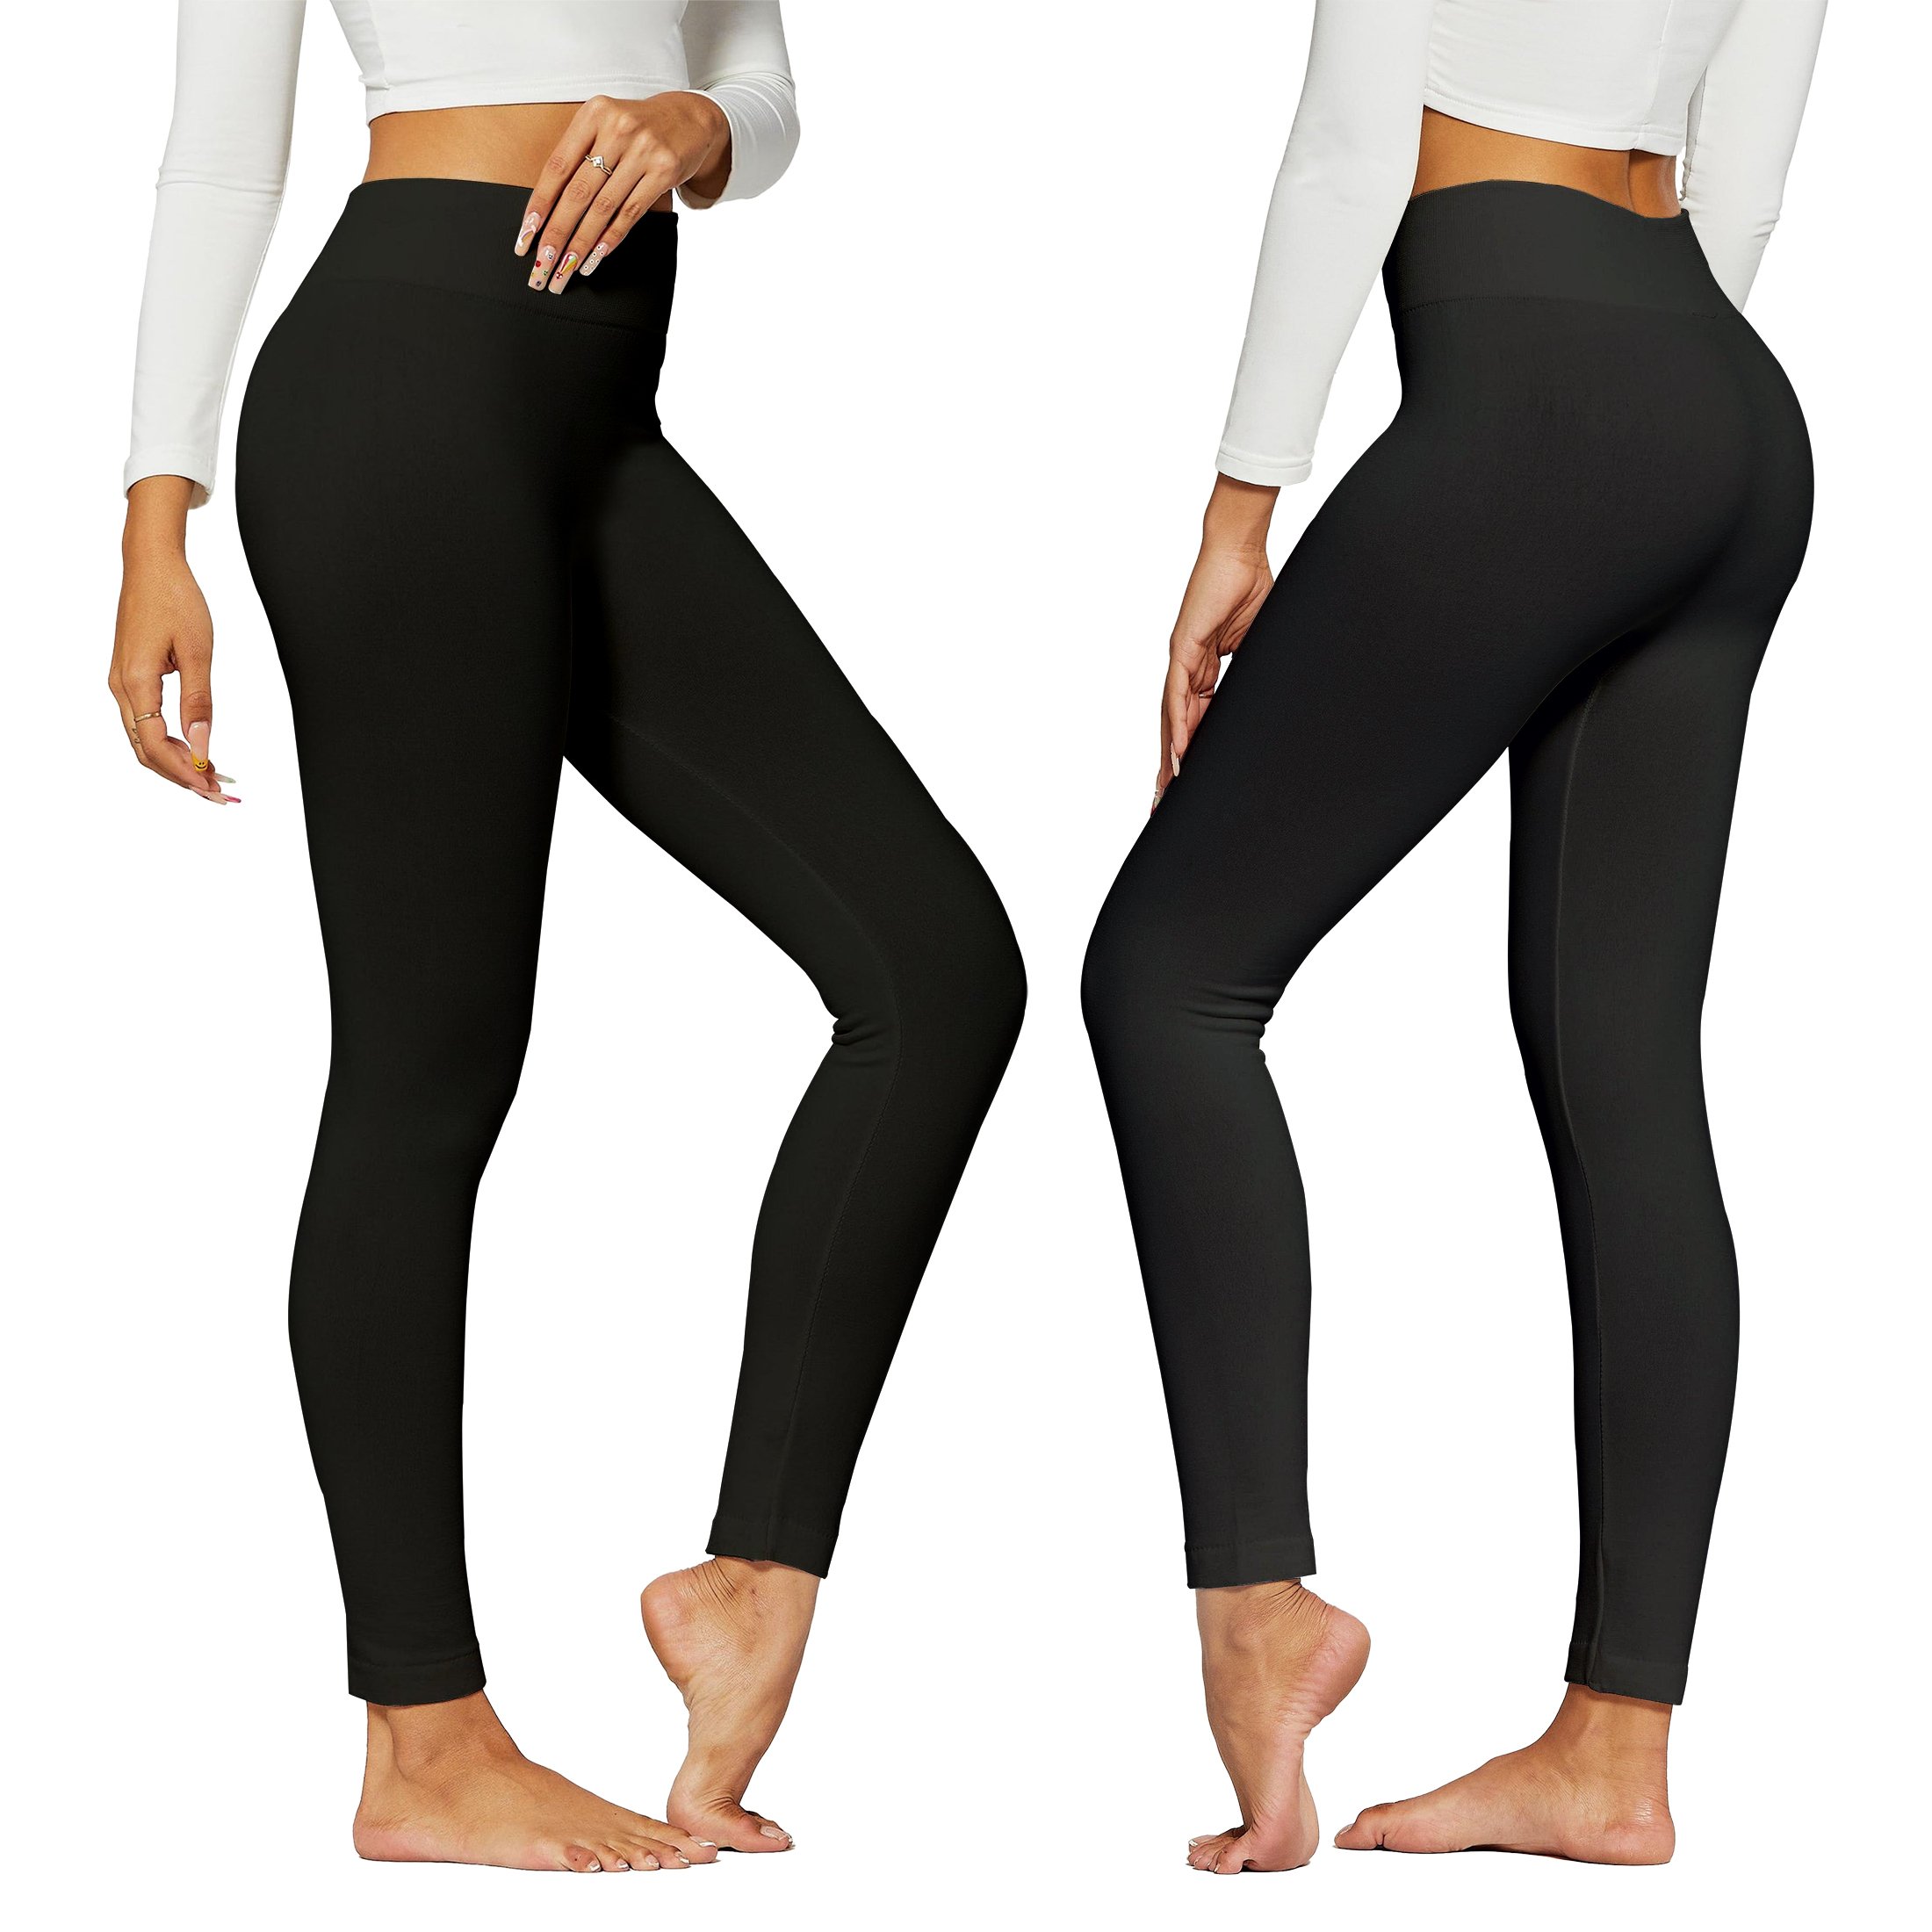 Women's Premium Quality High-Waist Fleece Lined Leggings (Plus Size Available) - Black, Large/X-Large